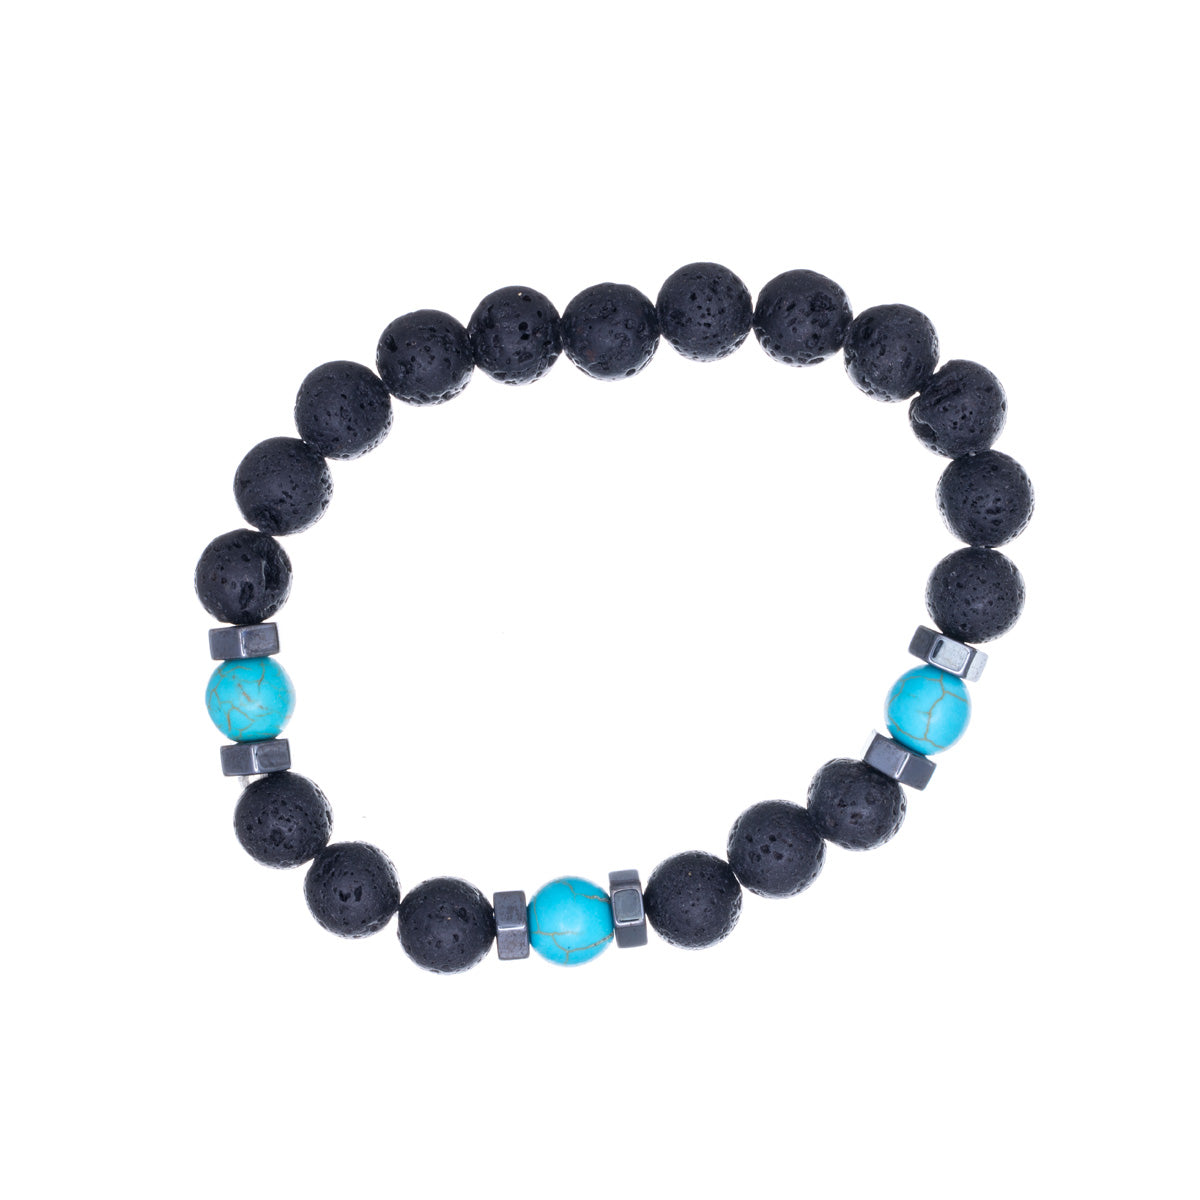 Elastic lava stone bracelet with glass beads